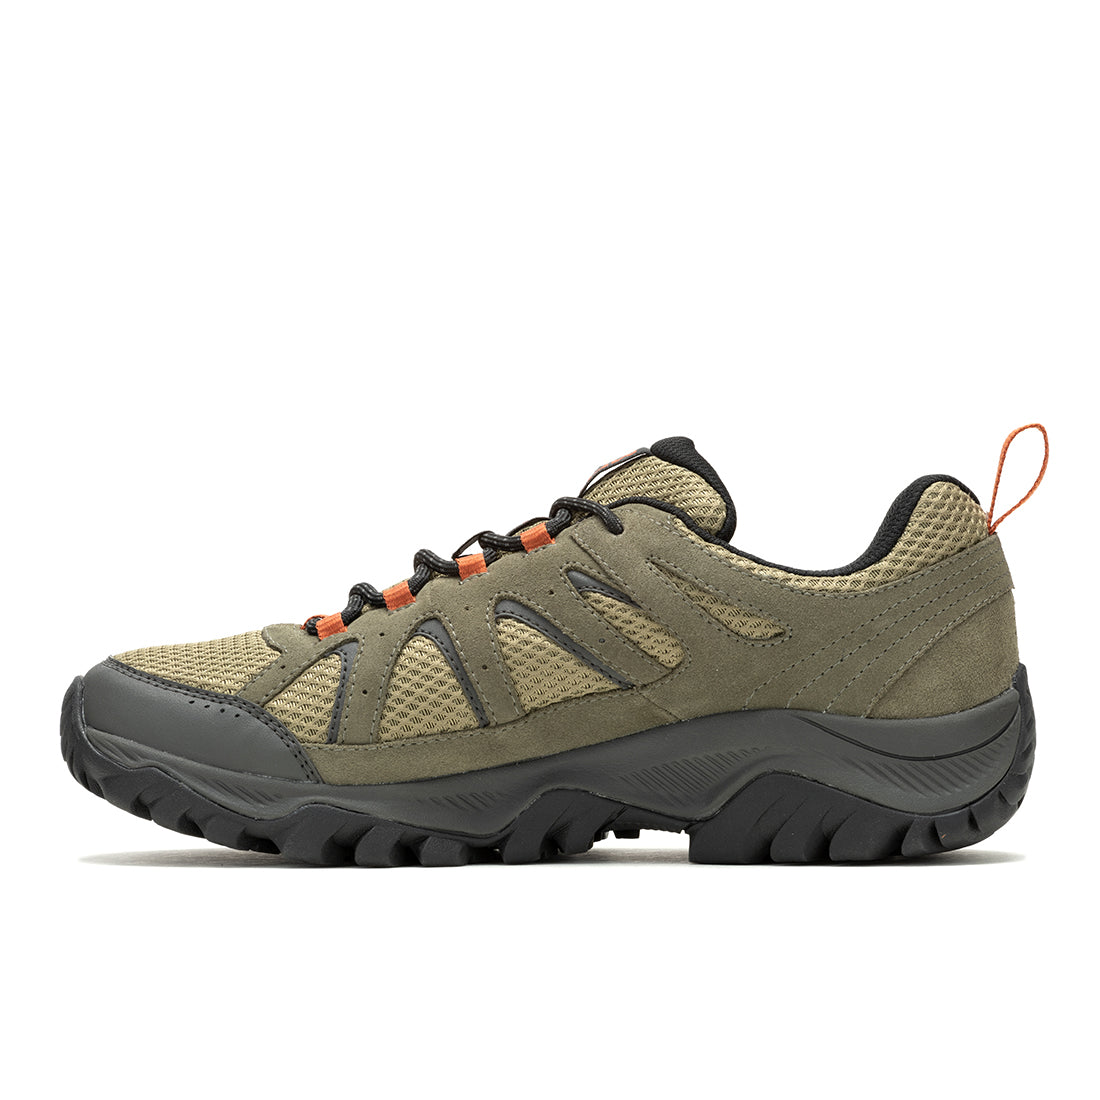 Oakcreek Waterproof-Olive/Clay Mens Hiking Shoes